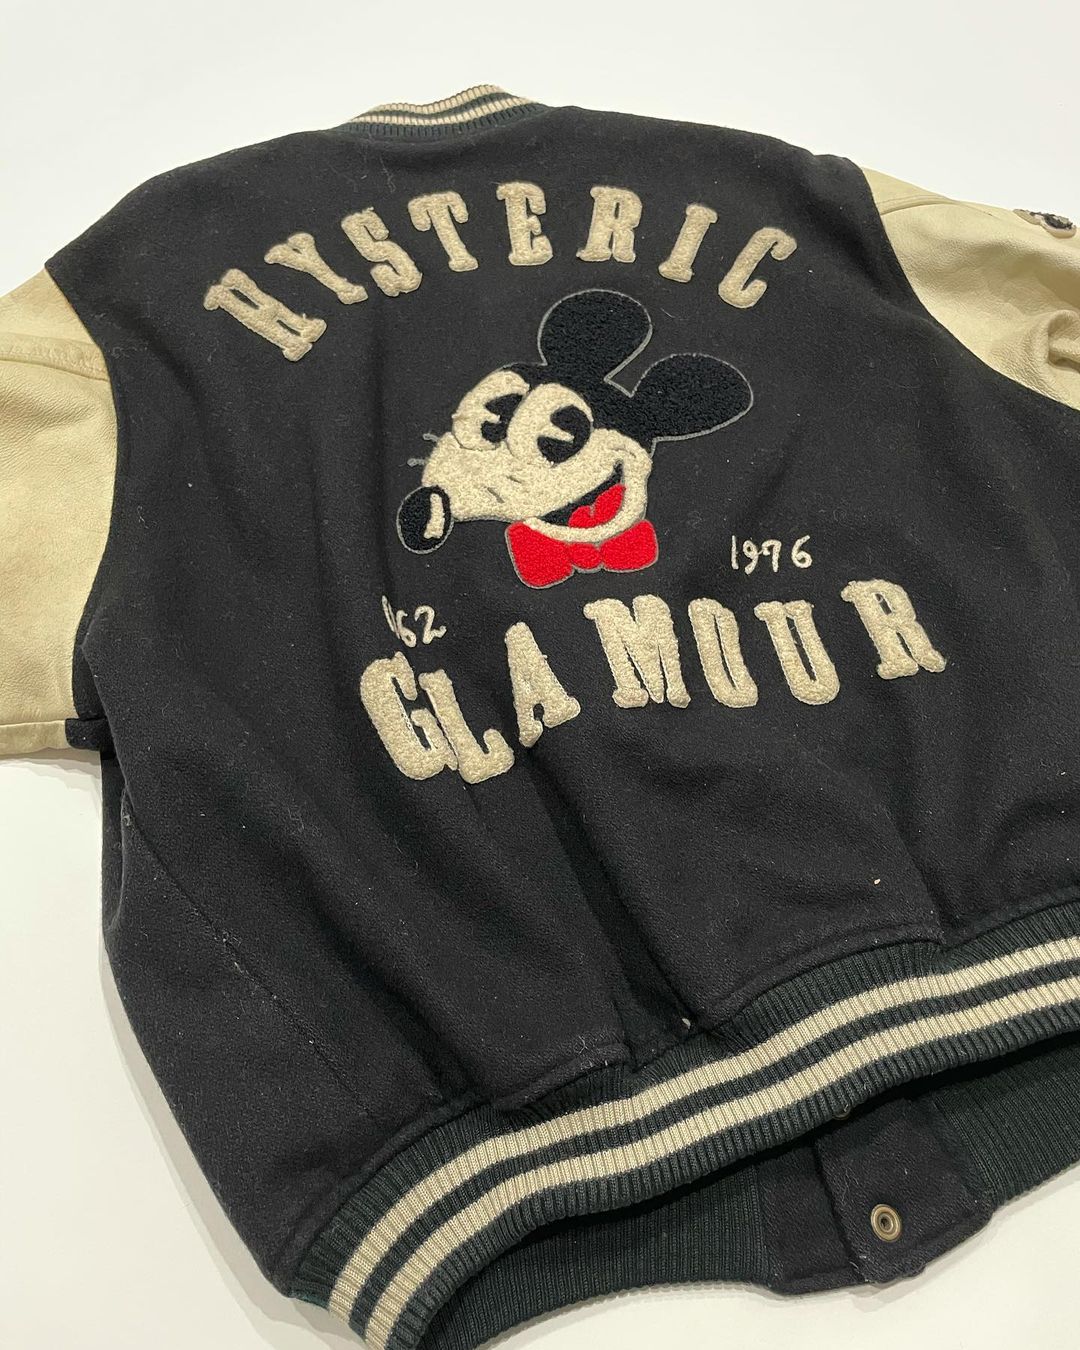 Hysteric Glamour Melx Mouse Black Varsity Jacket - Maker of Jacket